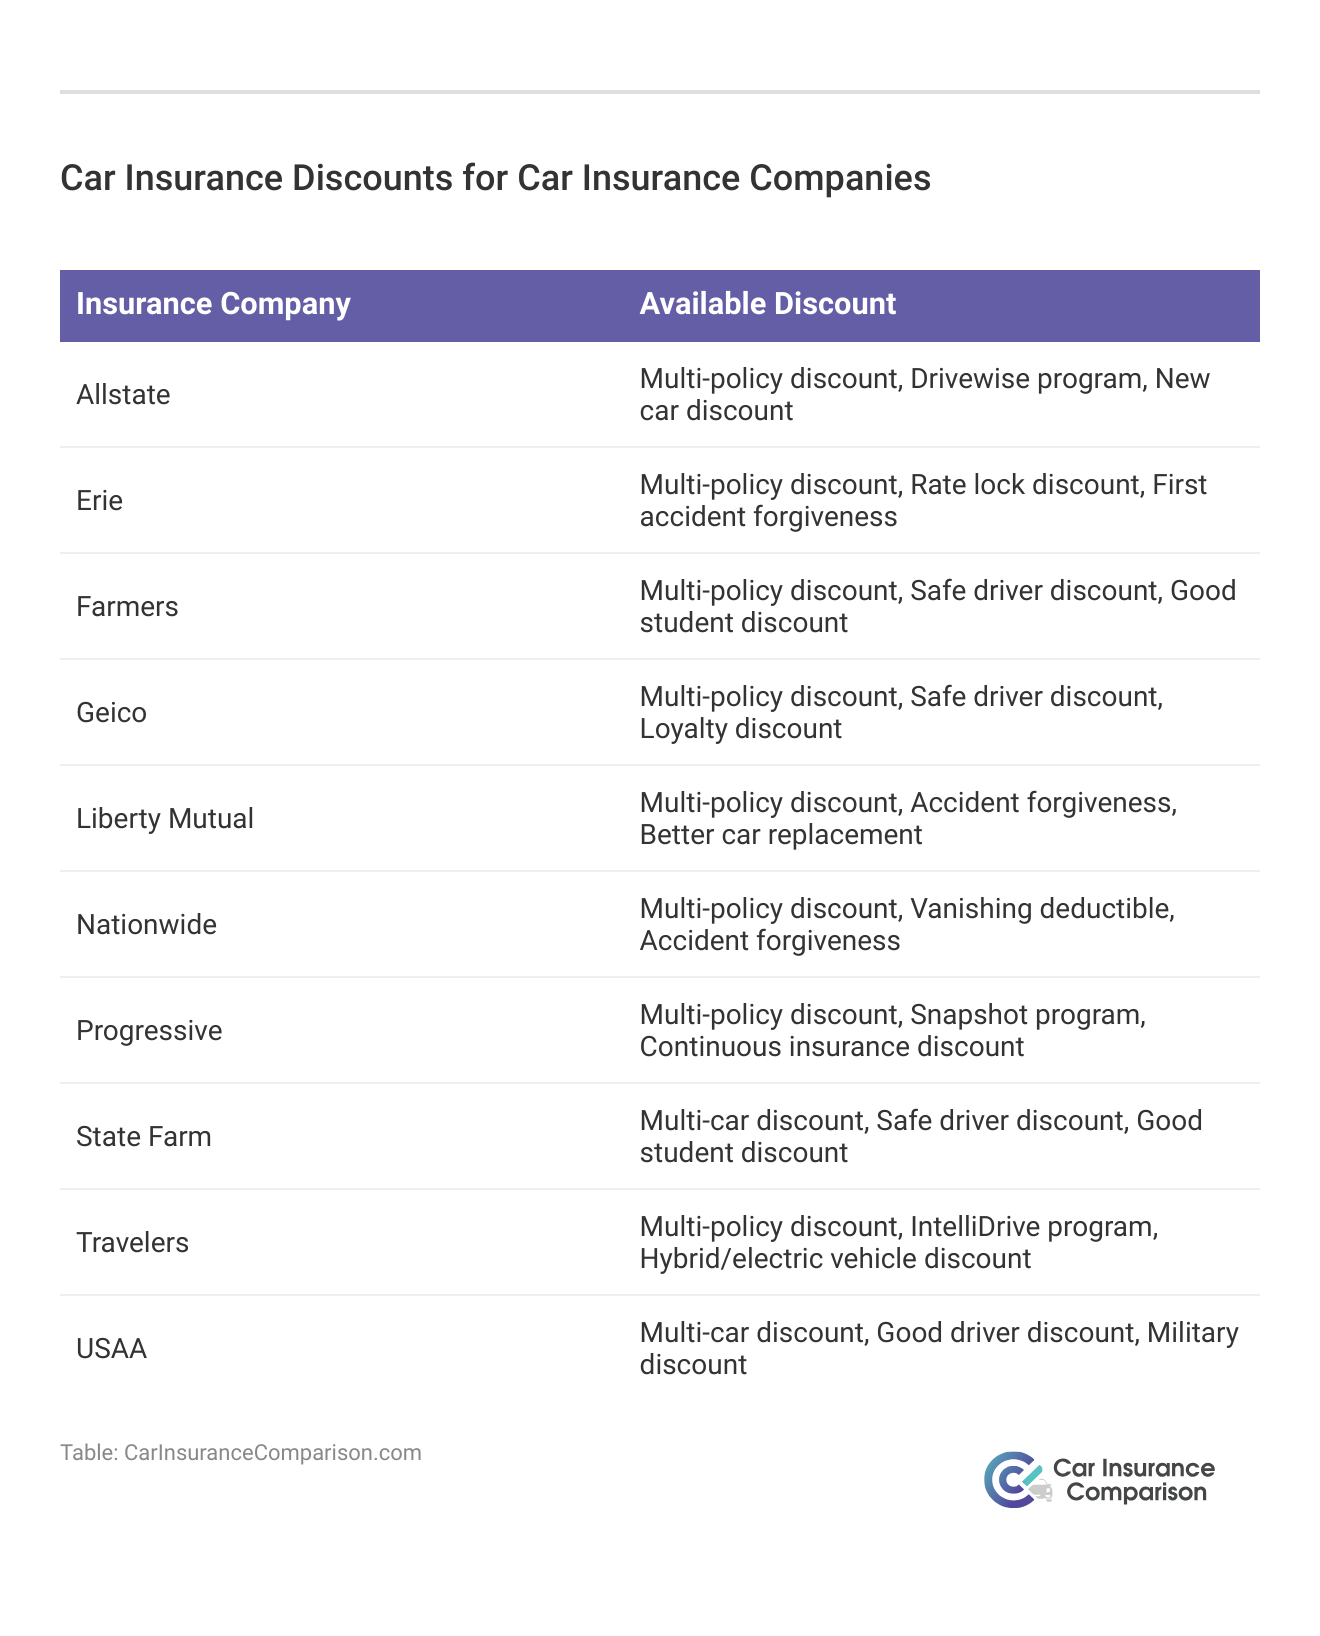 <h3>Car Insurance Discounts for Car Insurance Companies</h3>